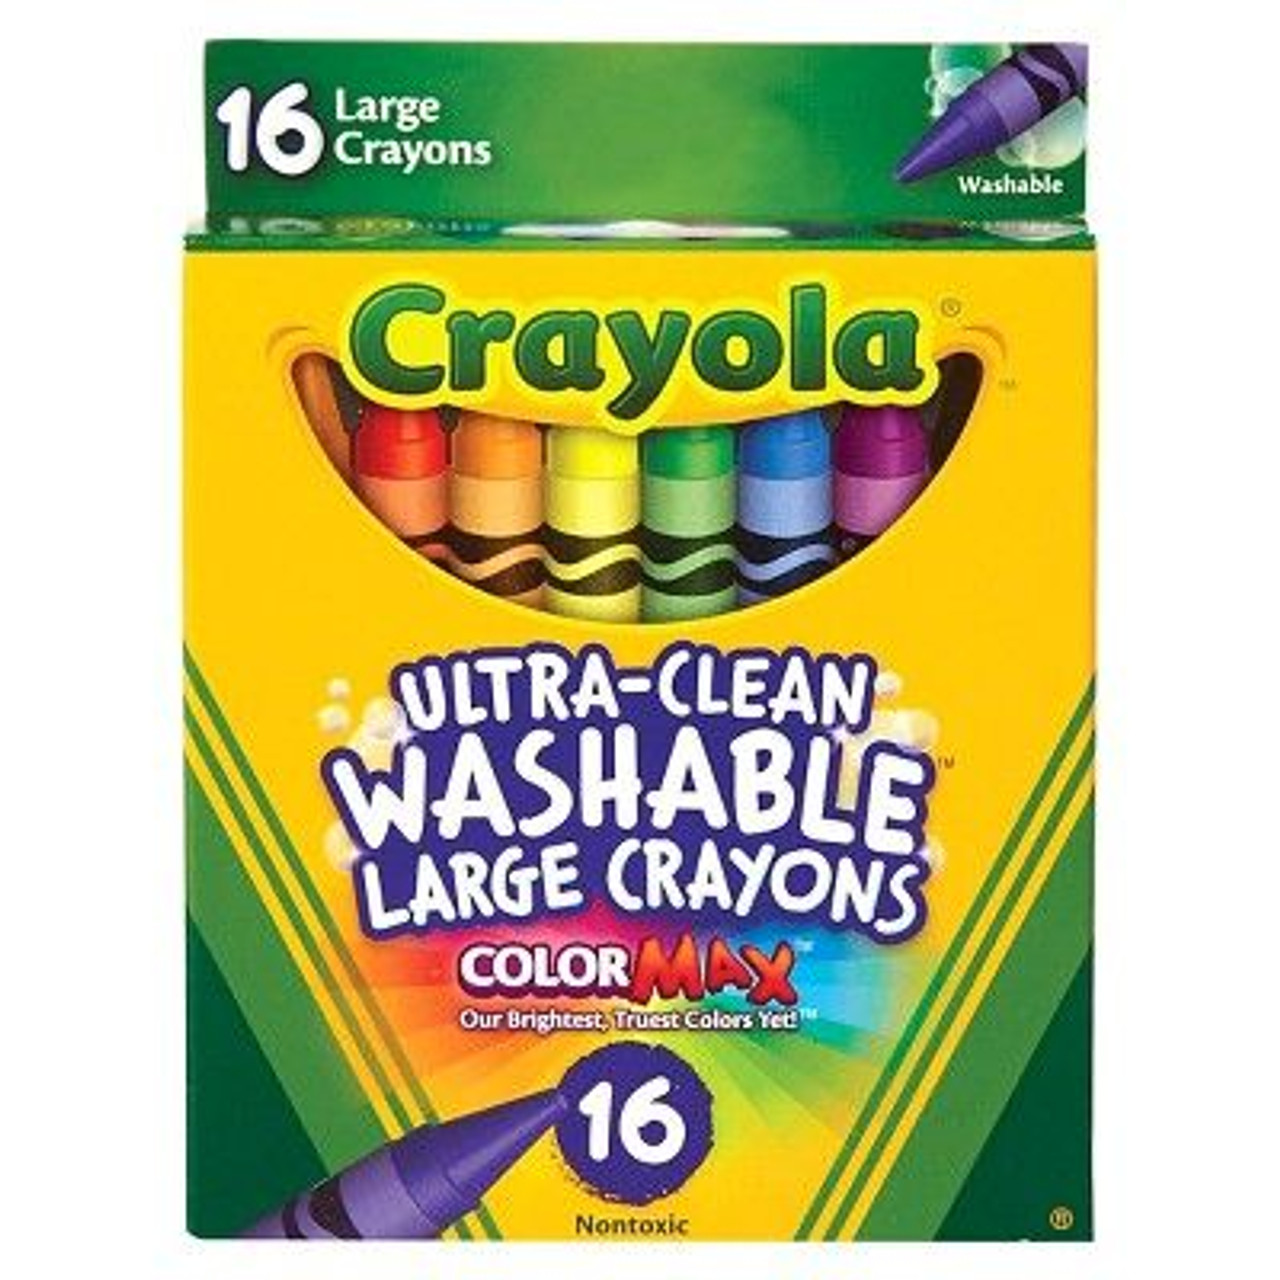 Crayola Crayon Sets - FLAX art & design